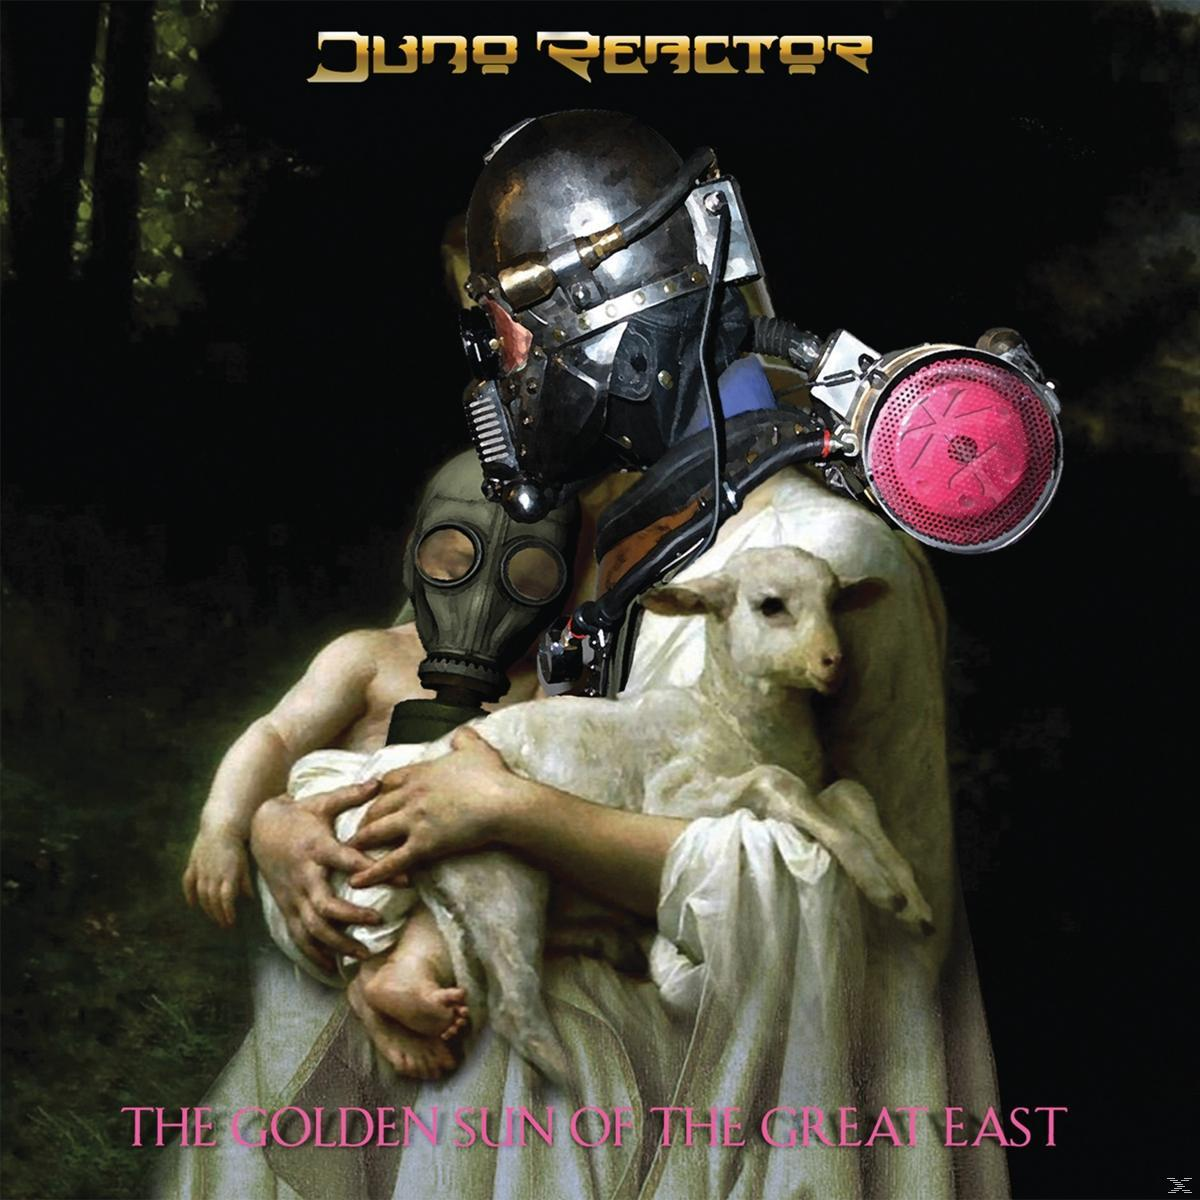 The - Of The Juno (CD) East Reactor Golden - Sun Great